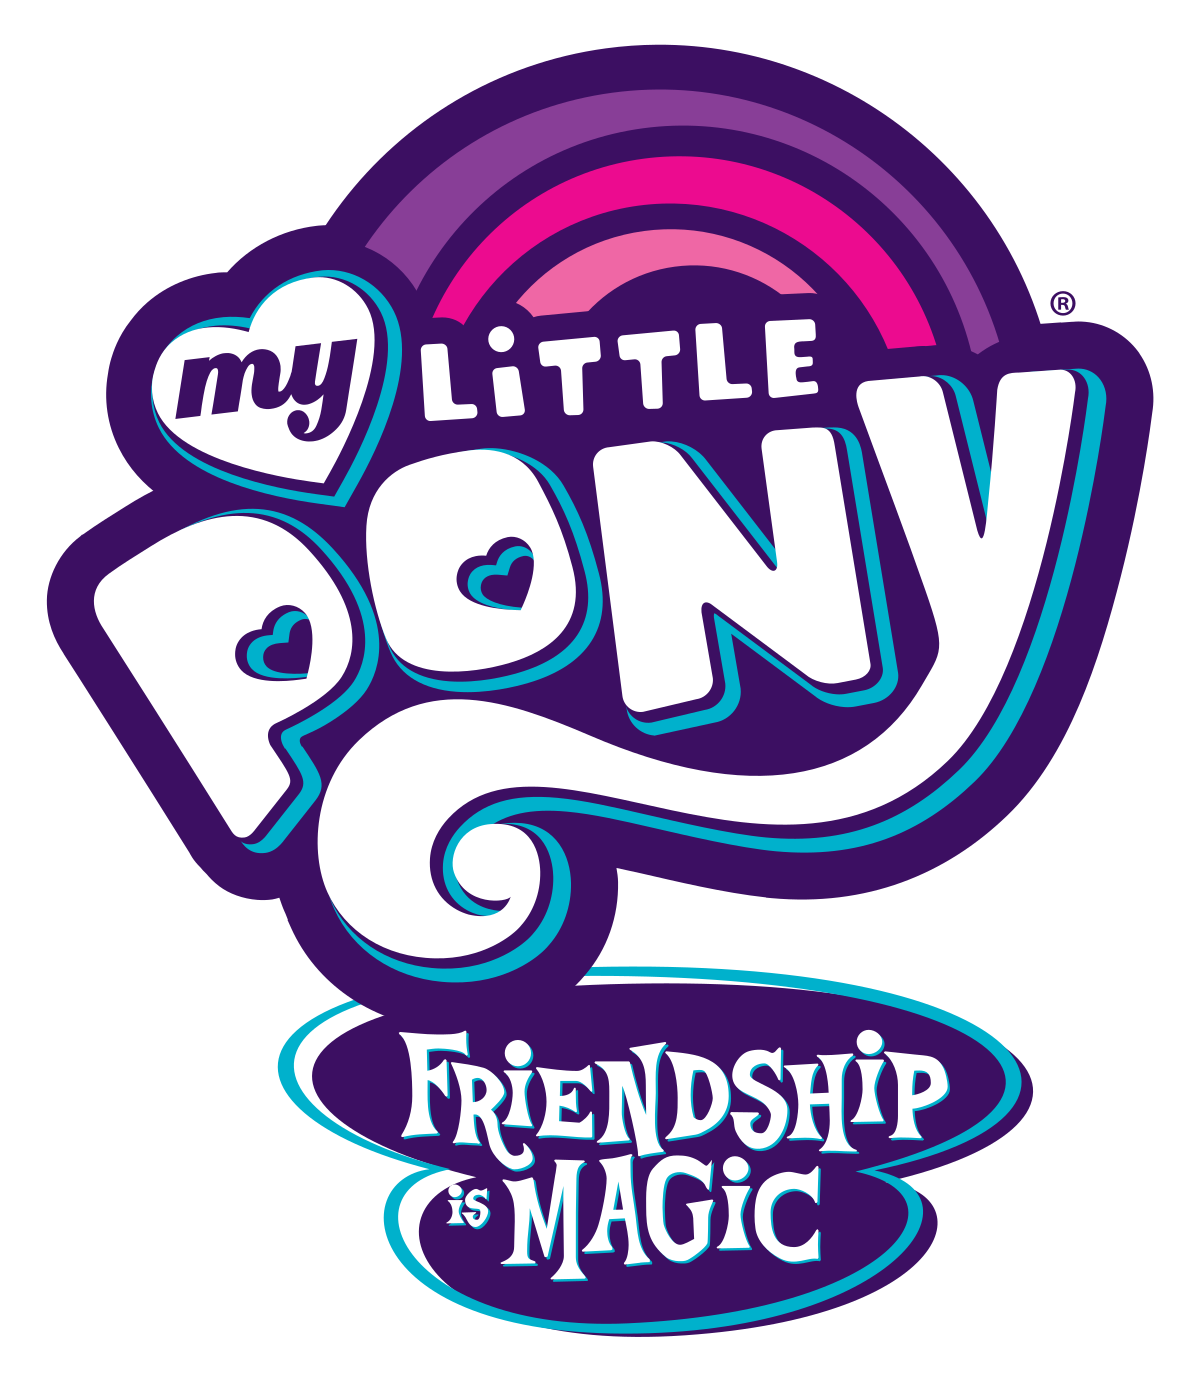 My Little Pony: Friendship Is Magic.